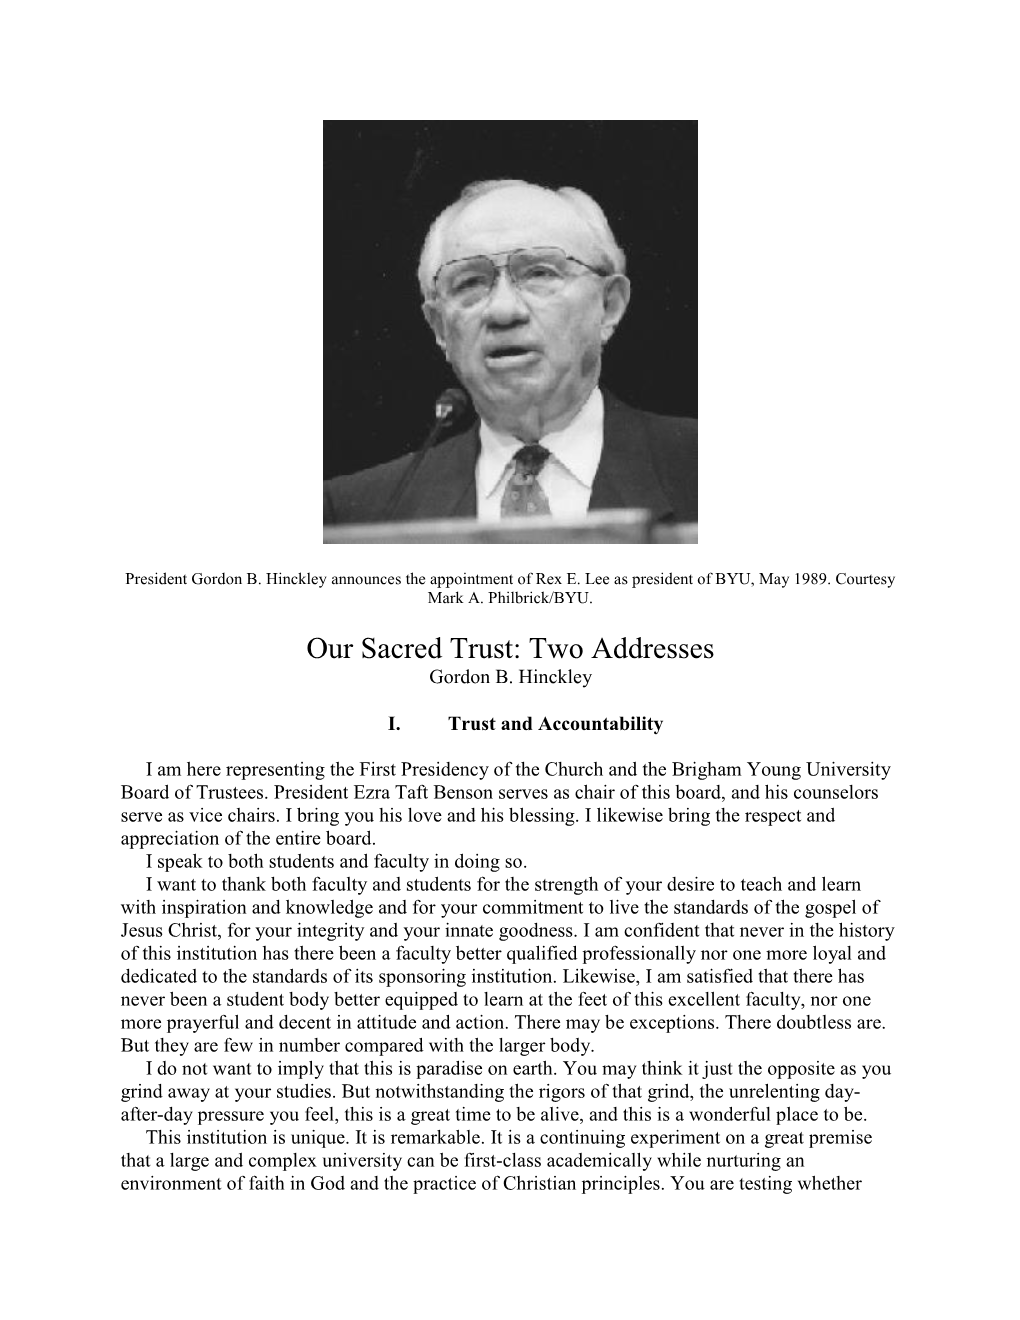 Our Sacred Trust: Two Addresses Gordon B